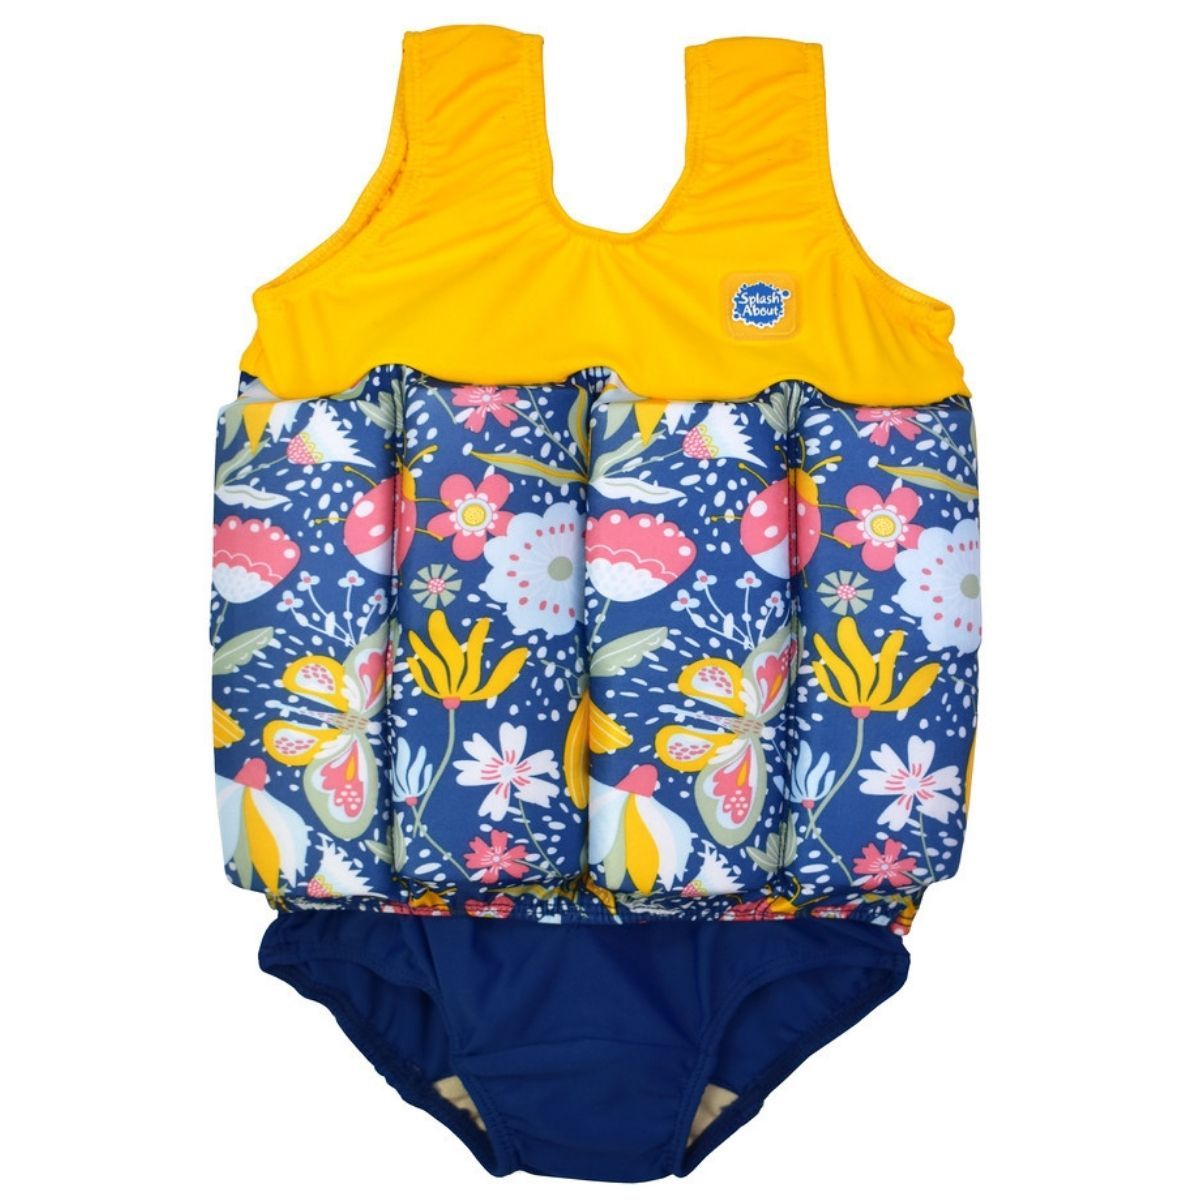 Alyberry Toddler Children Float Suit with adjustable buoyancy Swimwear 